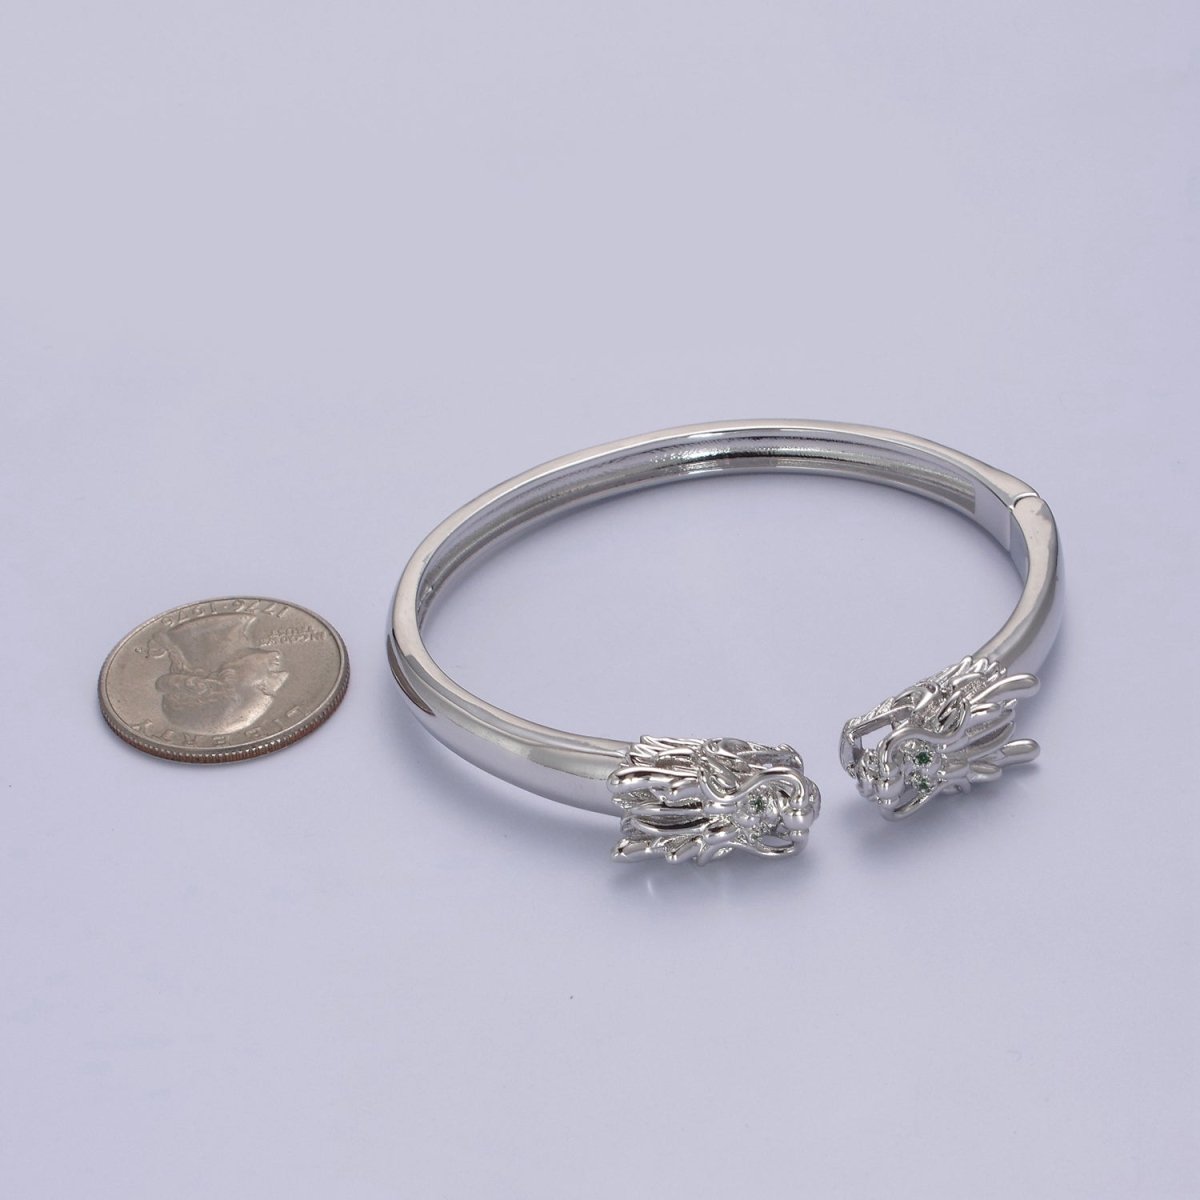 Double Dragon Head Bracelet - Adjustable Bangle bracelet - Lucky Dragon Bangle Stackable Jewelry | WA-686 WA-687 Clearance Pricing - DLUXCA